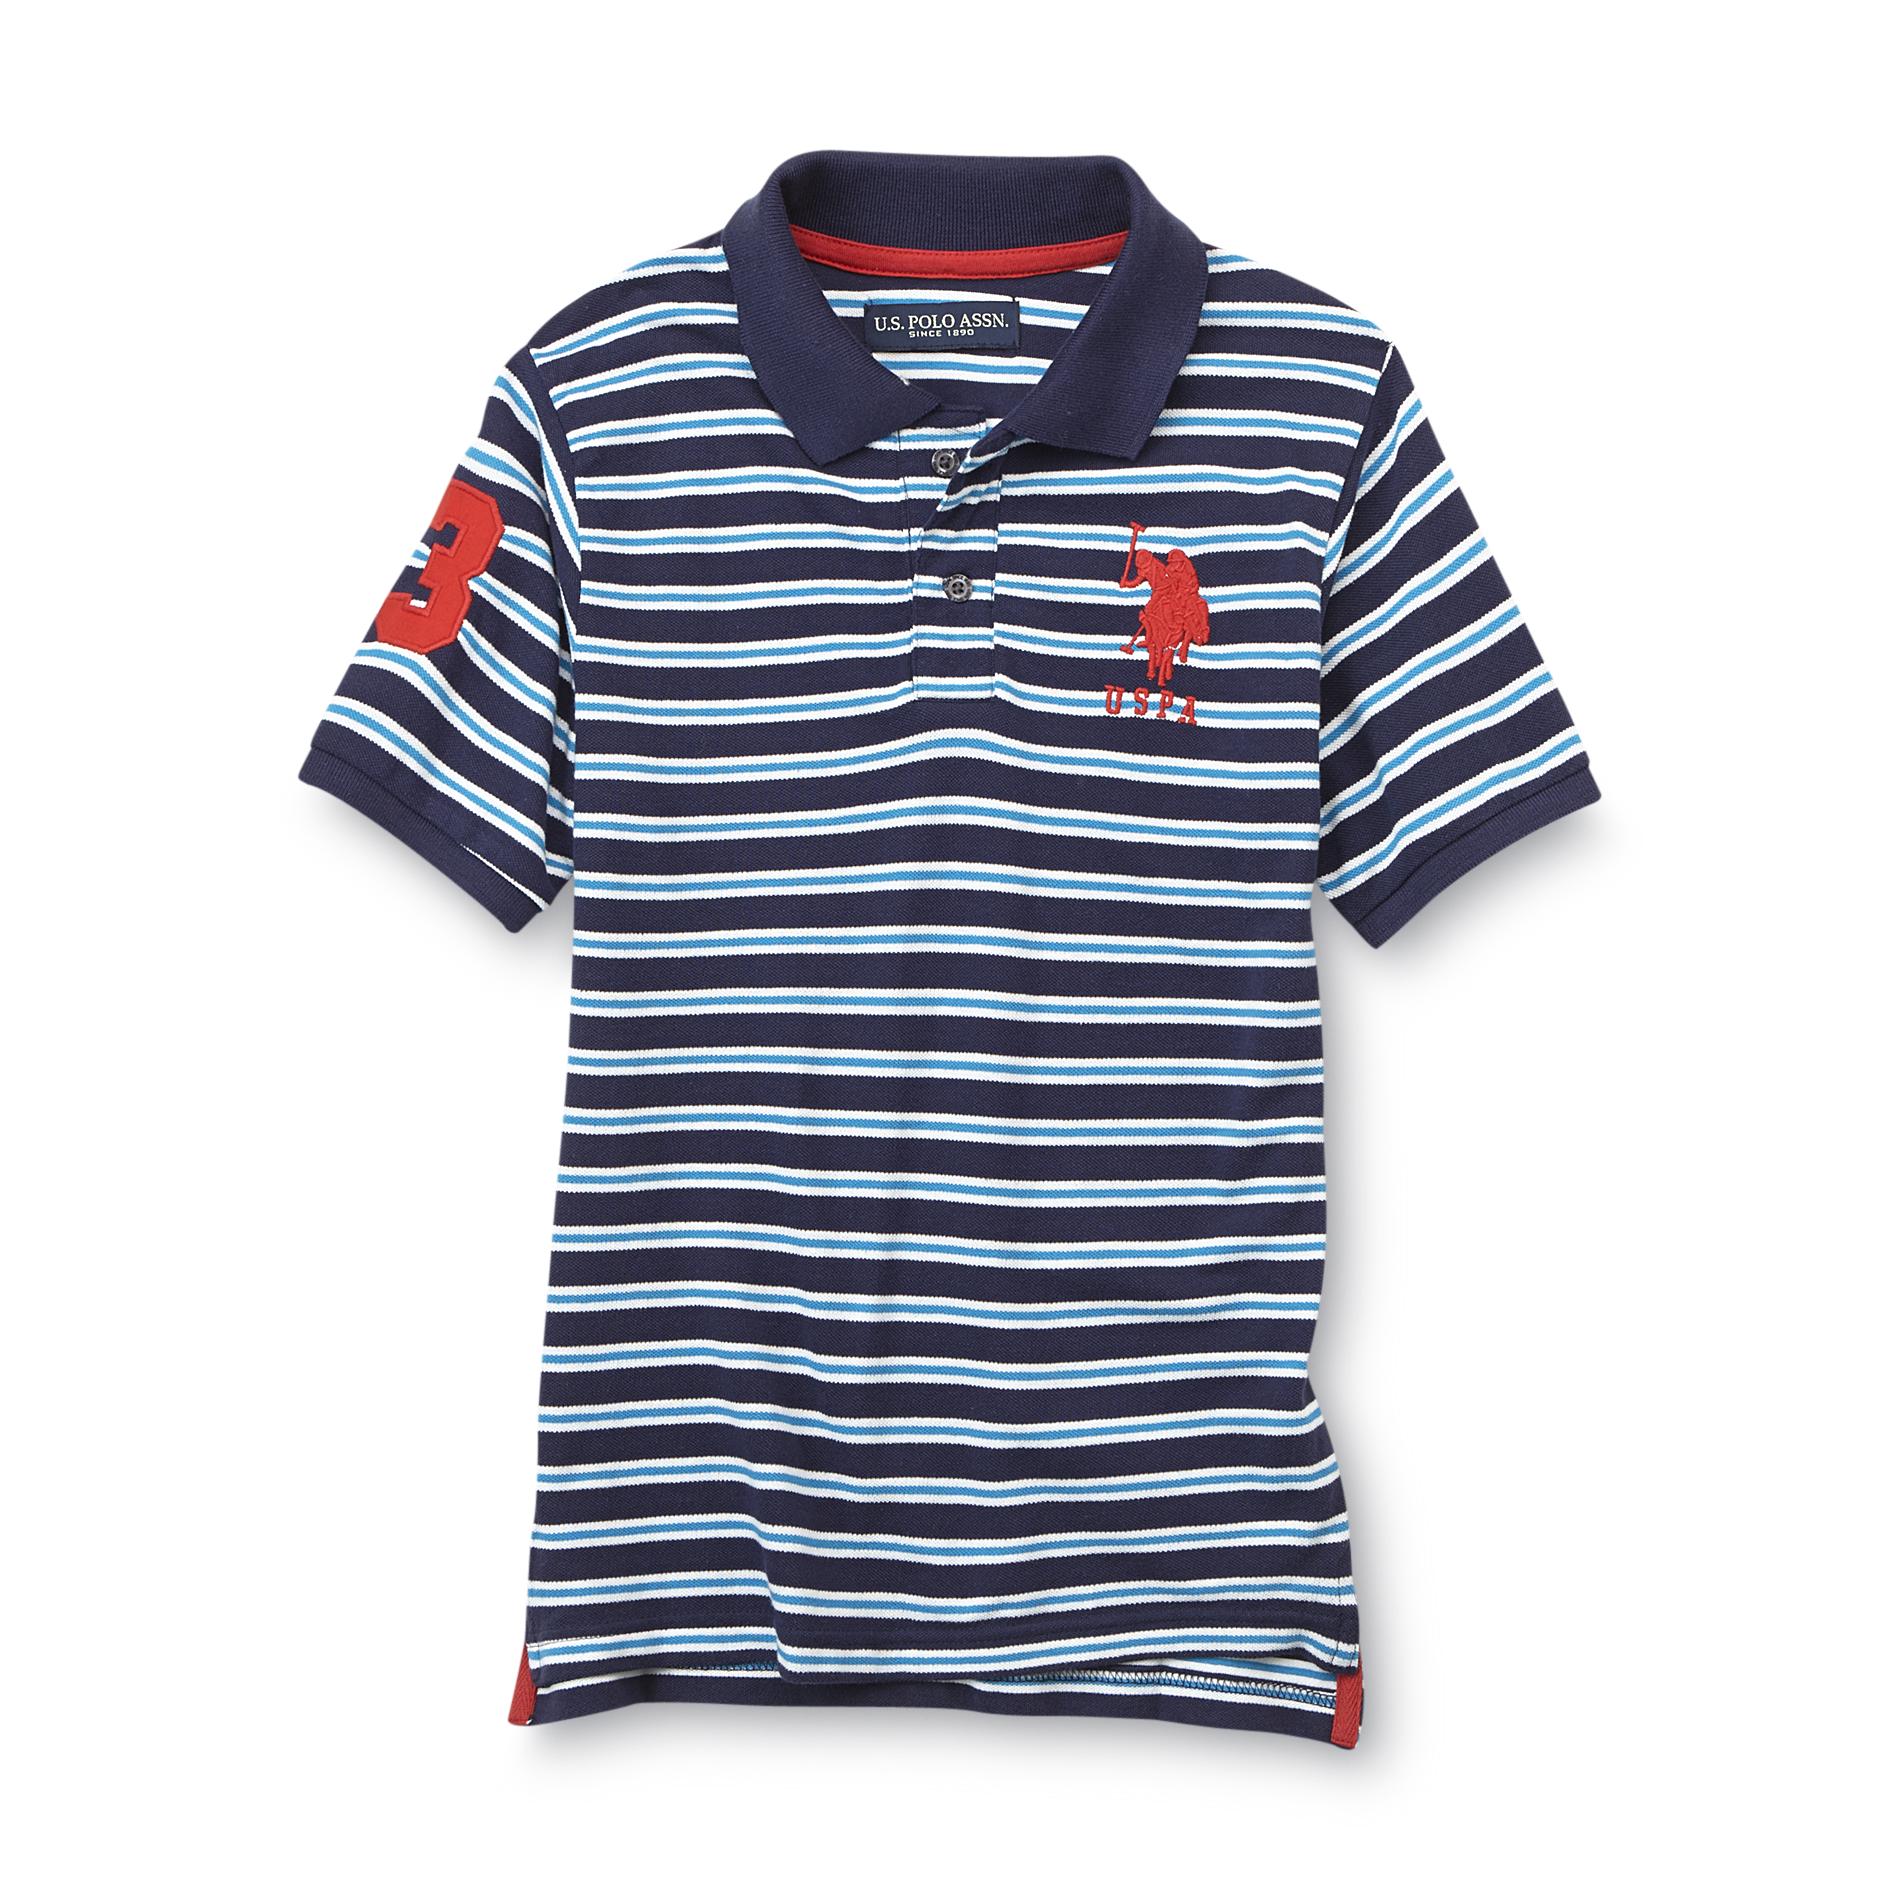 U.S. Polo Assn. Boy's Embroidered Polo Shirt - Striped